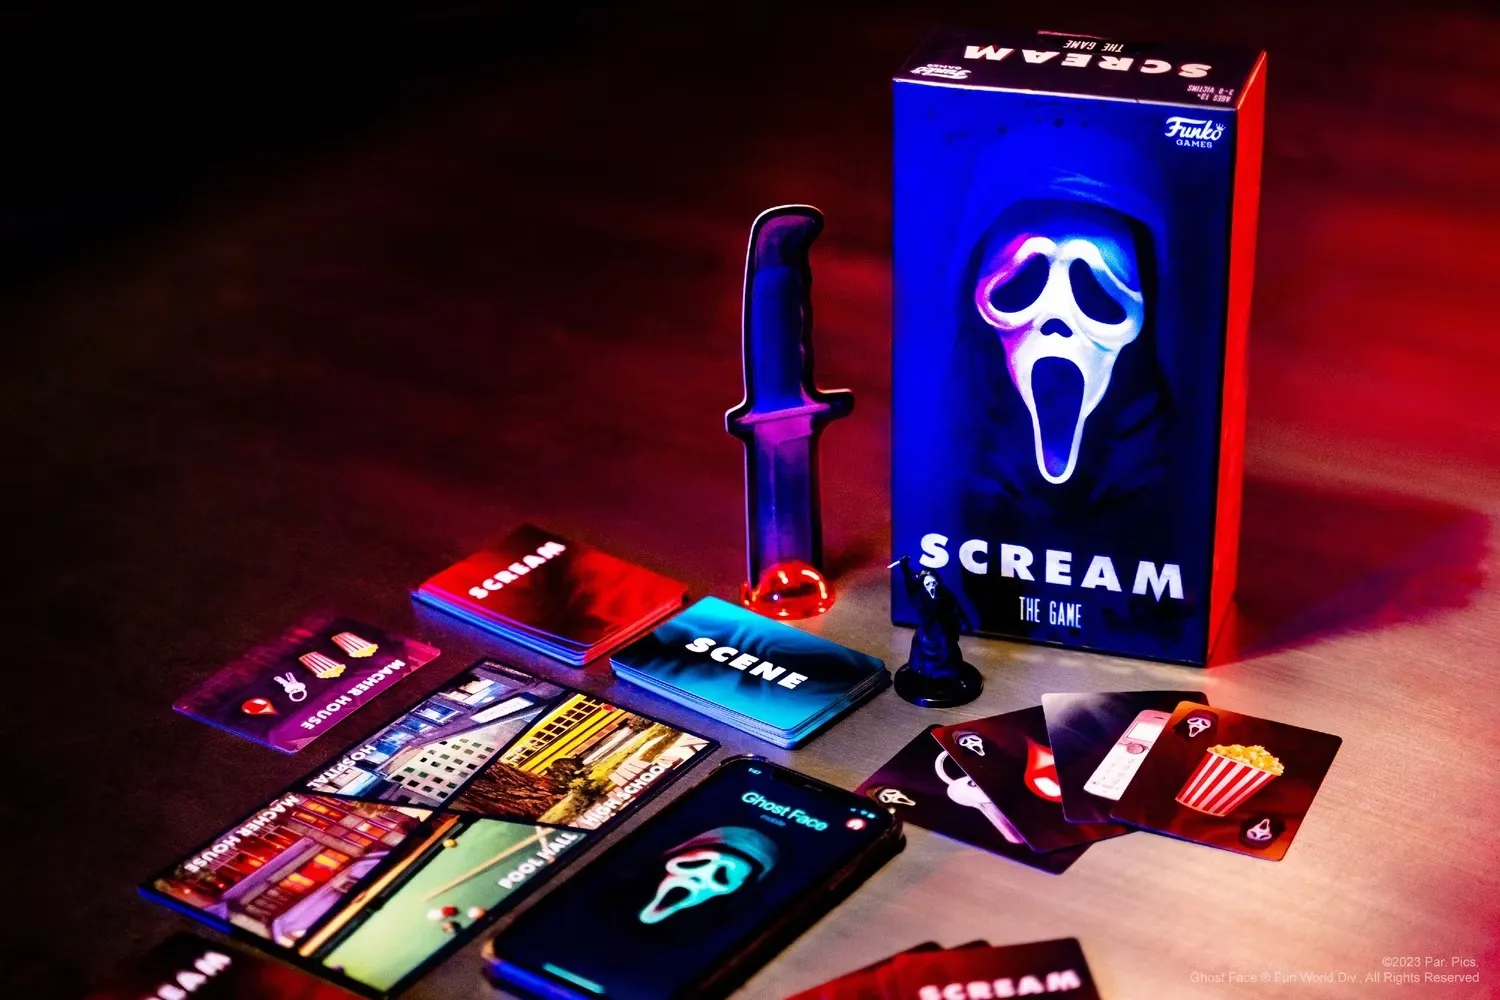 Scream galda spēle